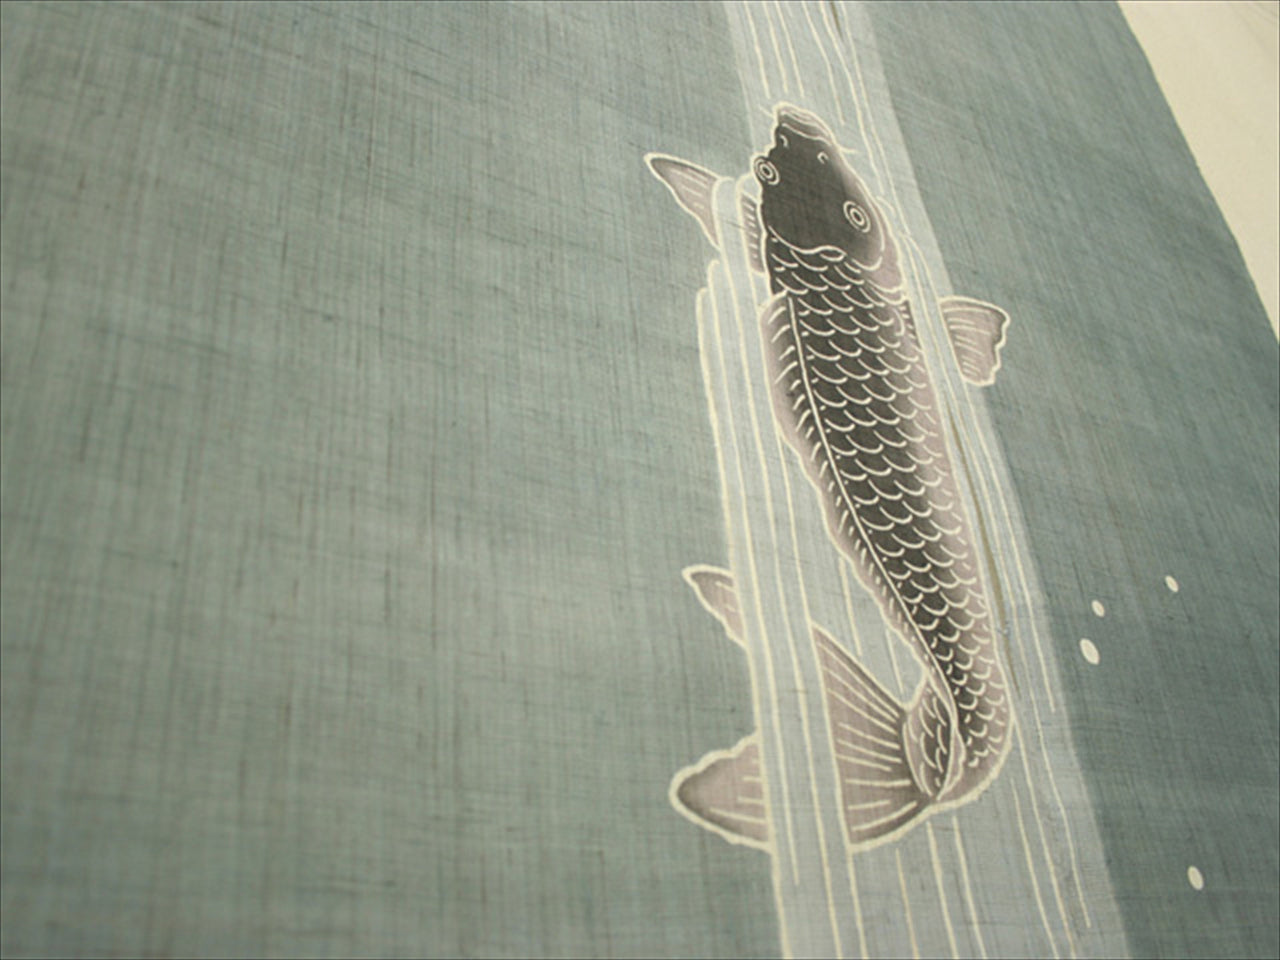 100％ Linen Japanese Handcraft Koi waterfall tapestry 88×150cm Noren door curtain Wall hanging